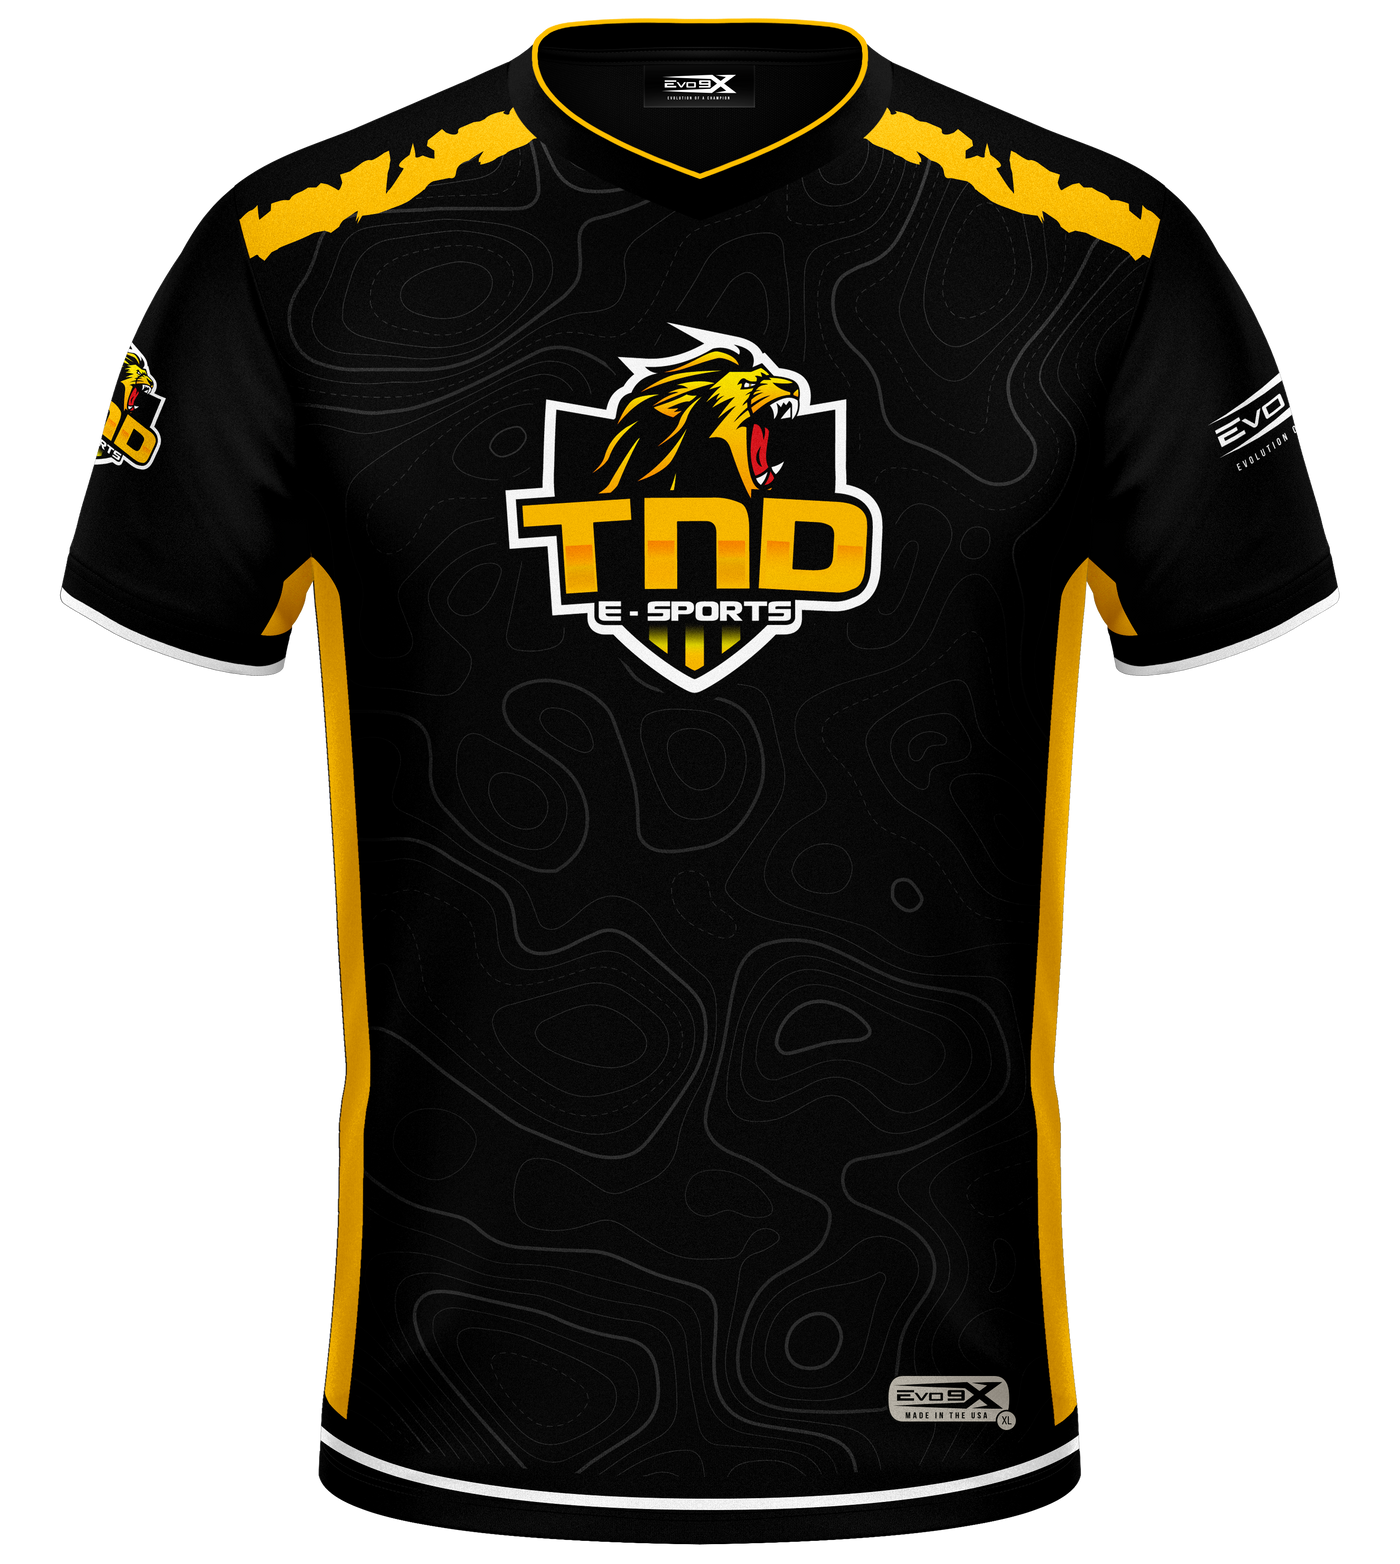 TND eSports Pro Jersey